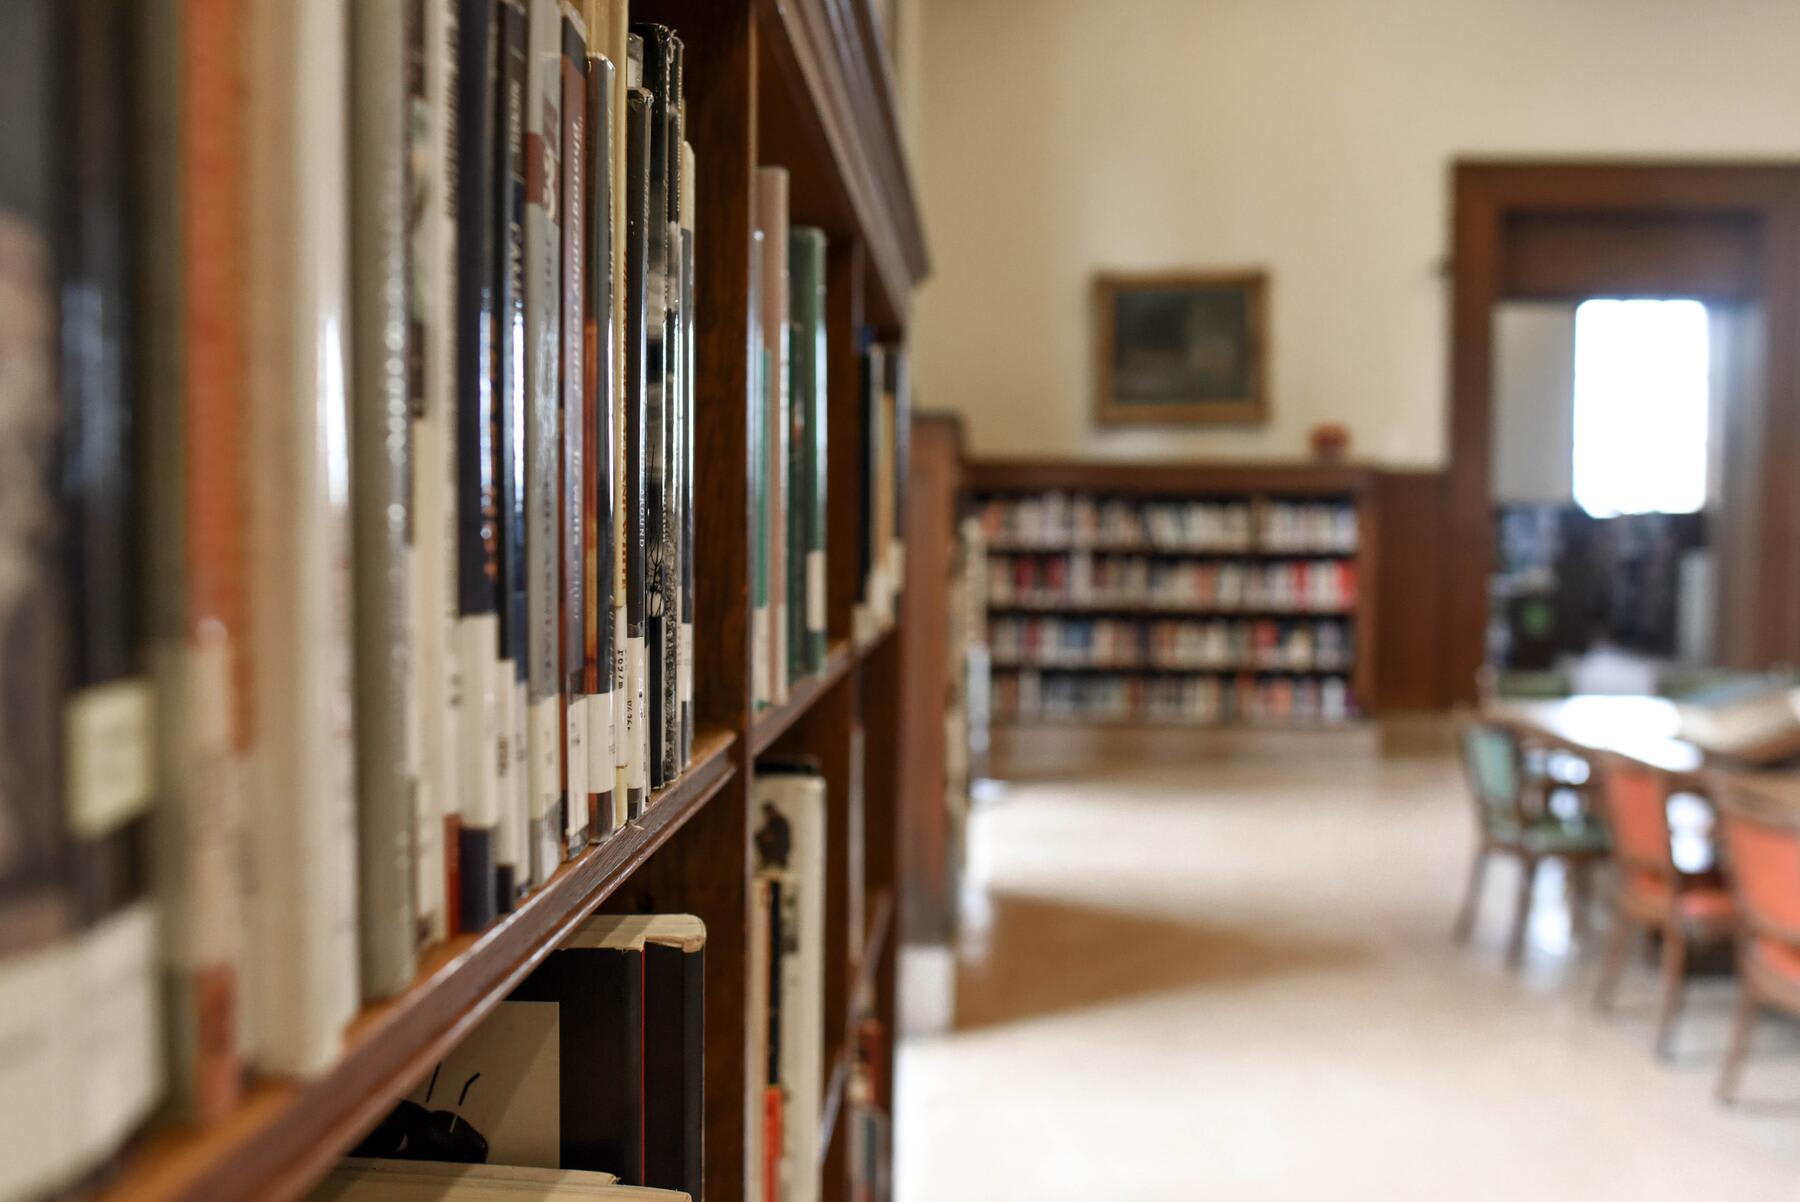 Shelves full of books in a school library